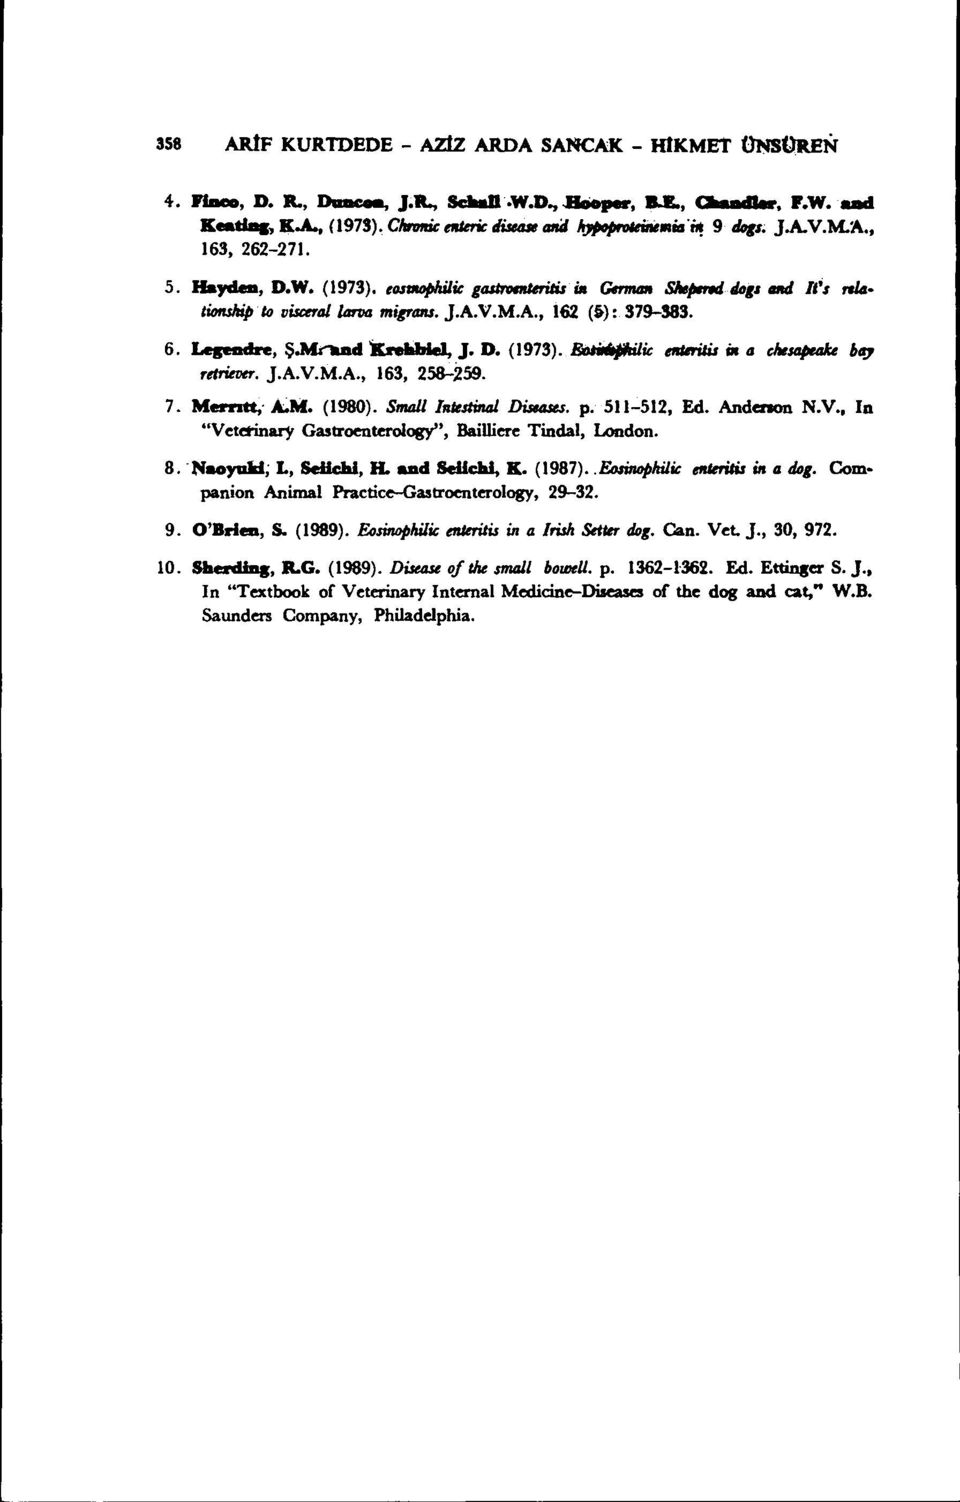 1 retrievtr. J.A.V.M.A., 163, 258-259. 7. Merntt," ~M. (1980). Small Irılestinal Disuses. p. SII-512, Ed. Andenon N.V., in "Veterinary Gastroenterology", Baillitte Tinelal, London. 8.